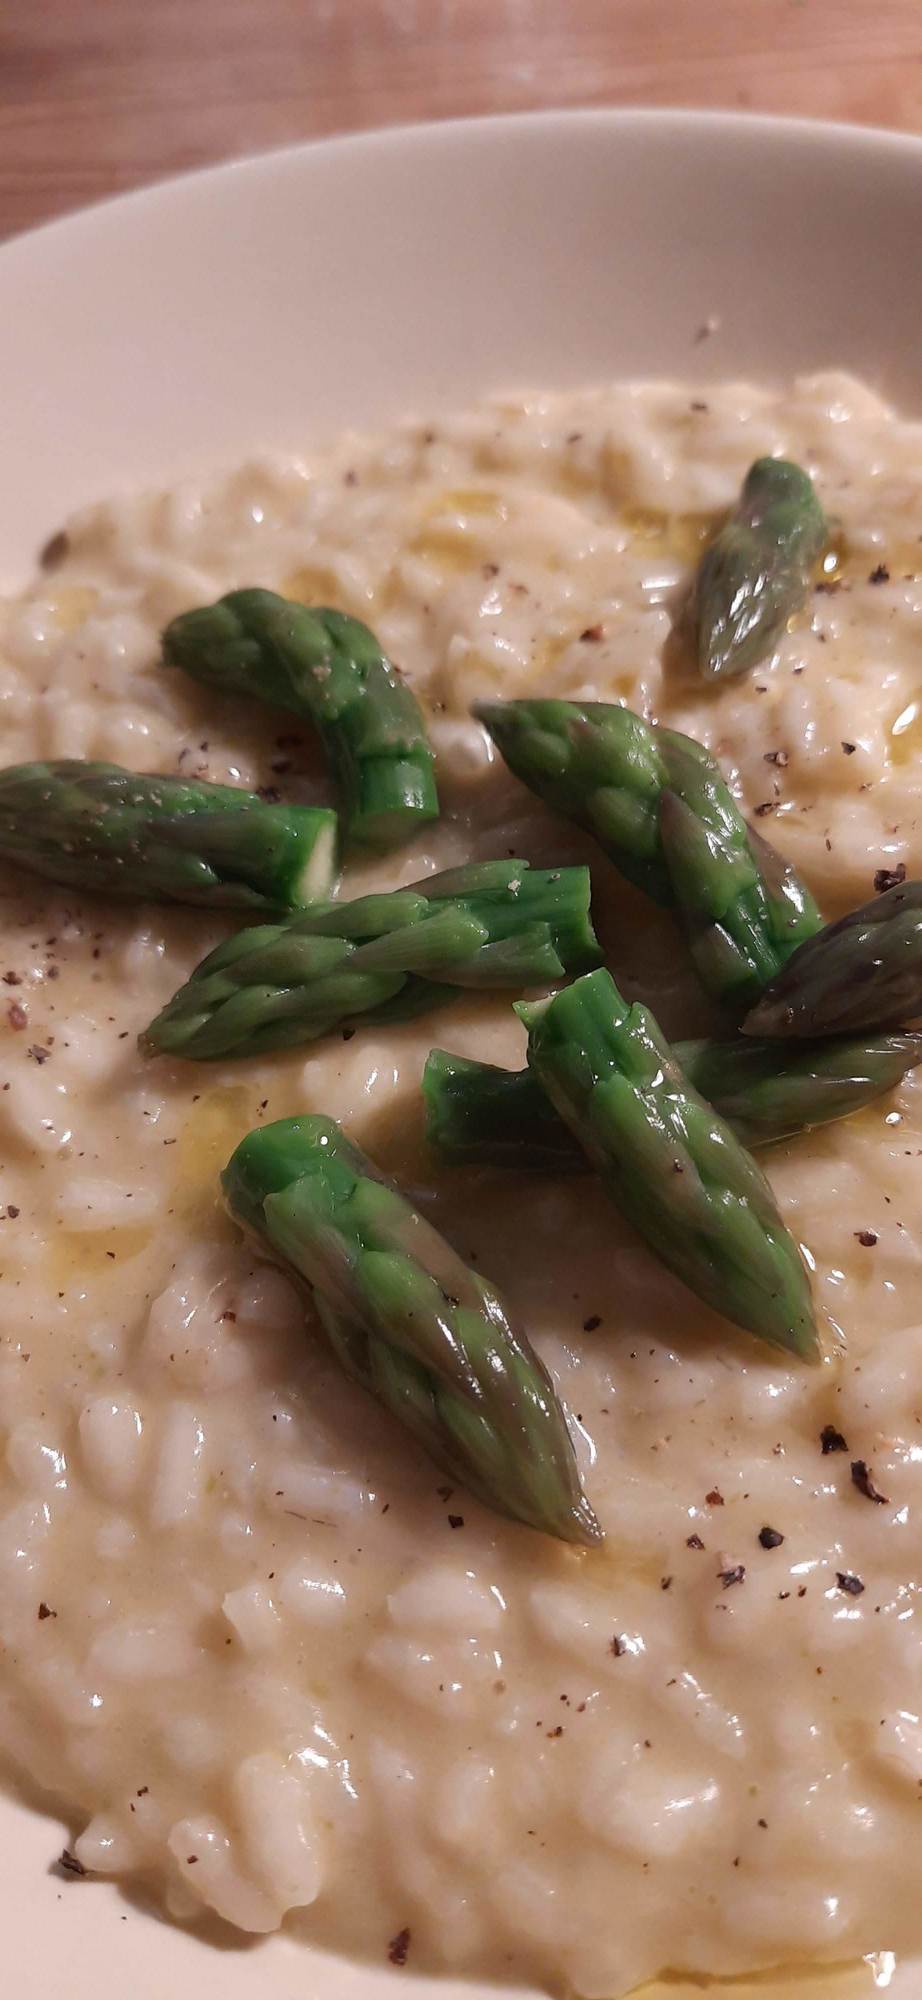 risotto agli asparagi of Marina Marini - Recipefy